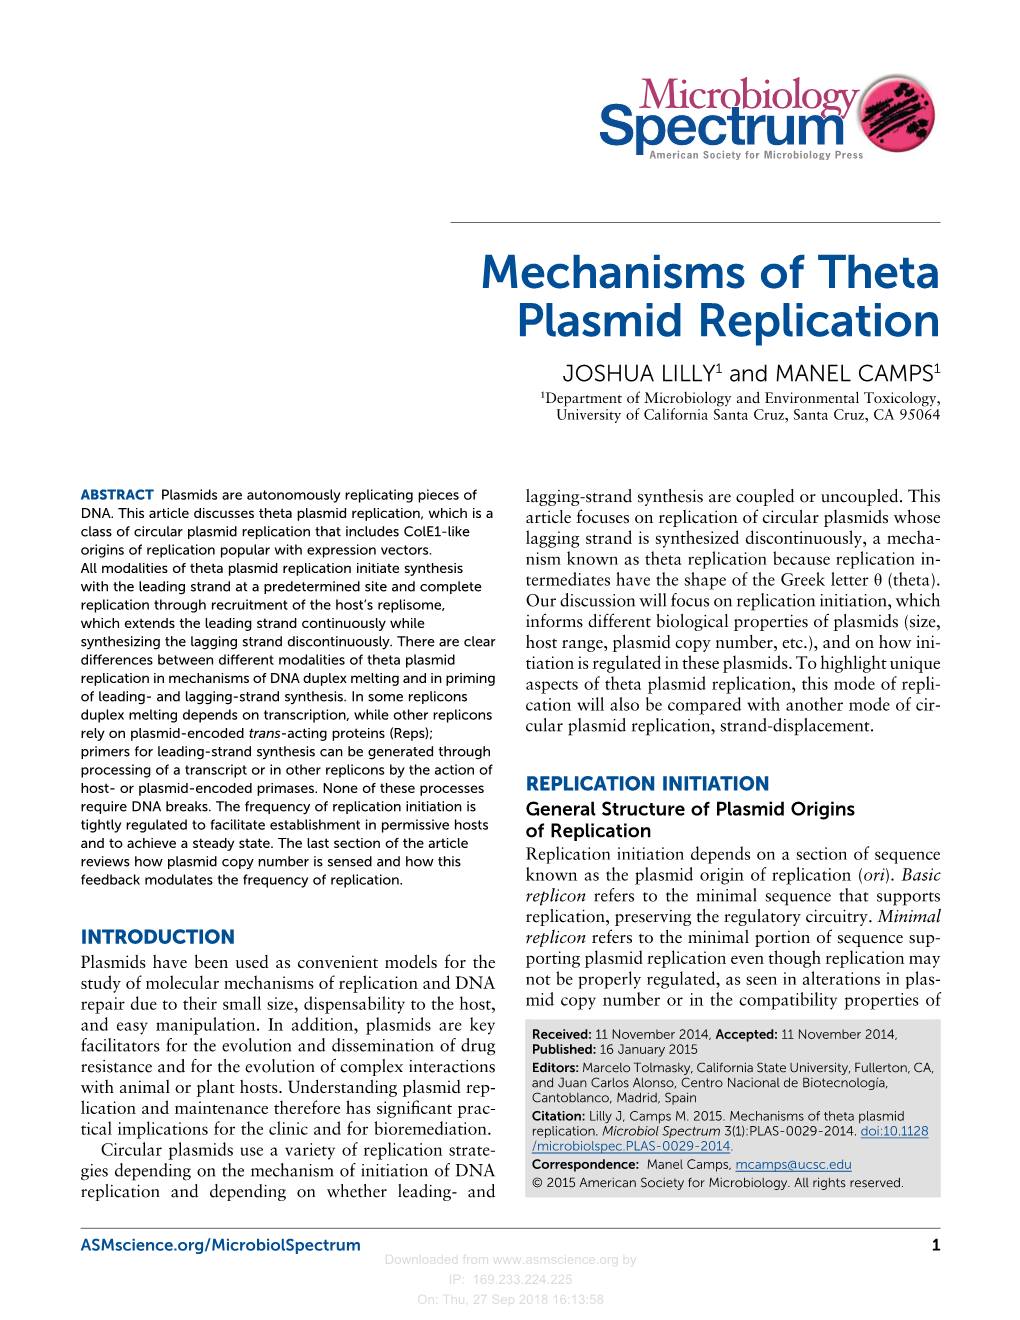 Mechanisms of Theta Plasmid Replication